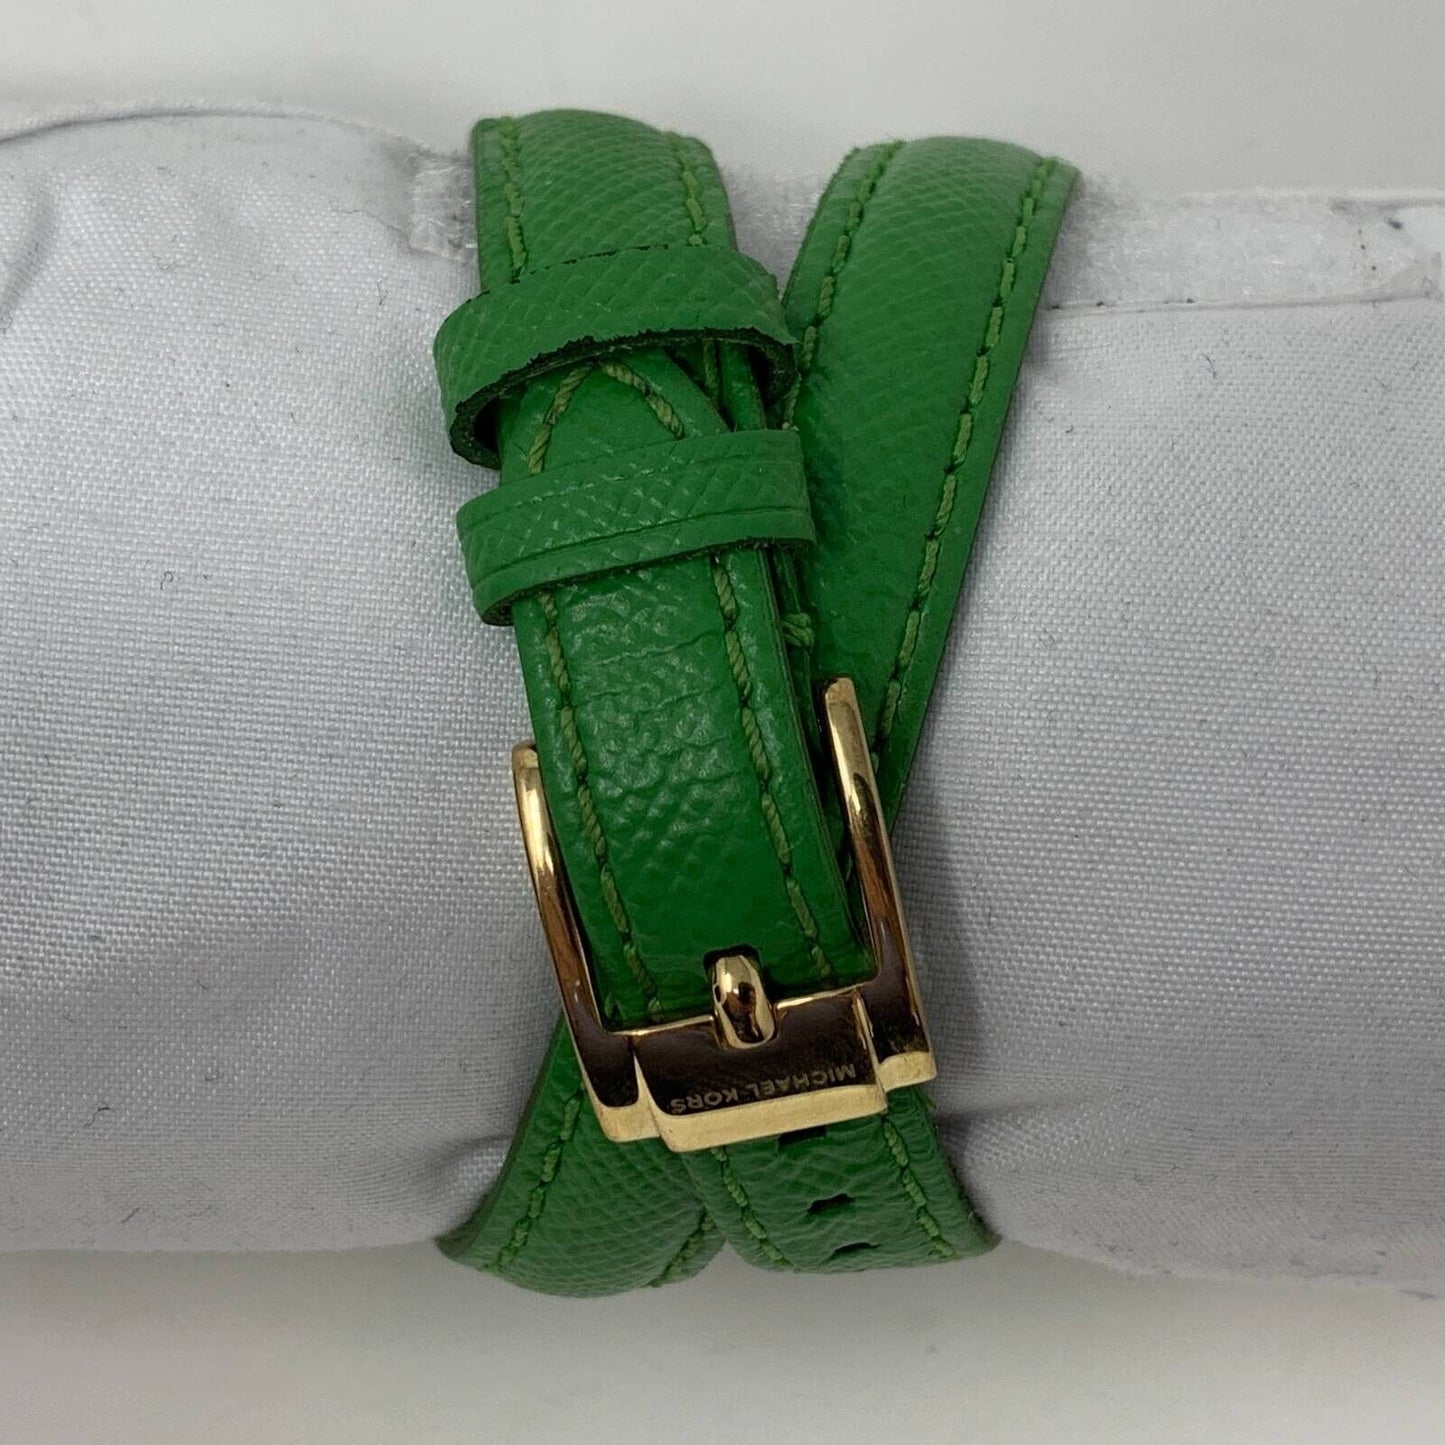 Michael Kors Womens Wrap Watch Runway MK2287 Gold Dial Slim Green Band 42mm